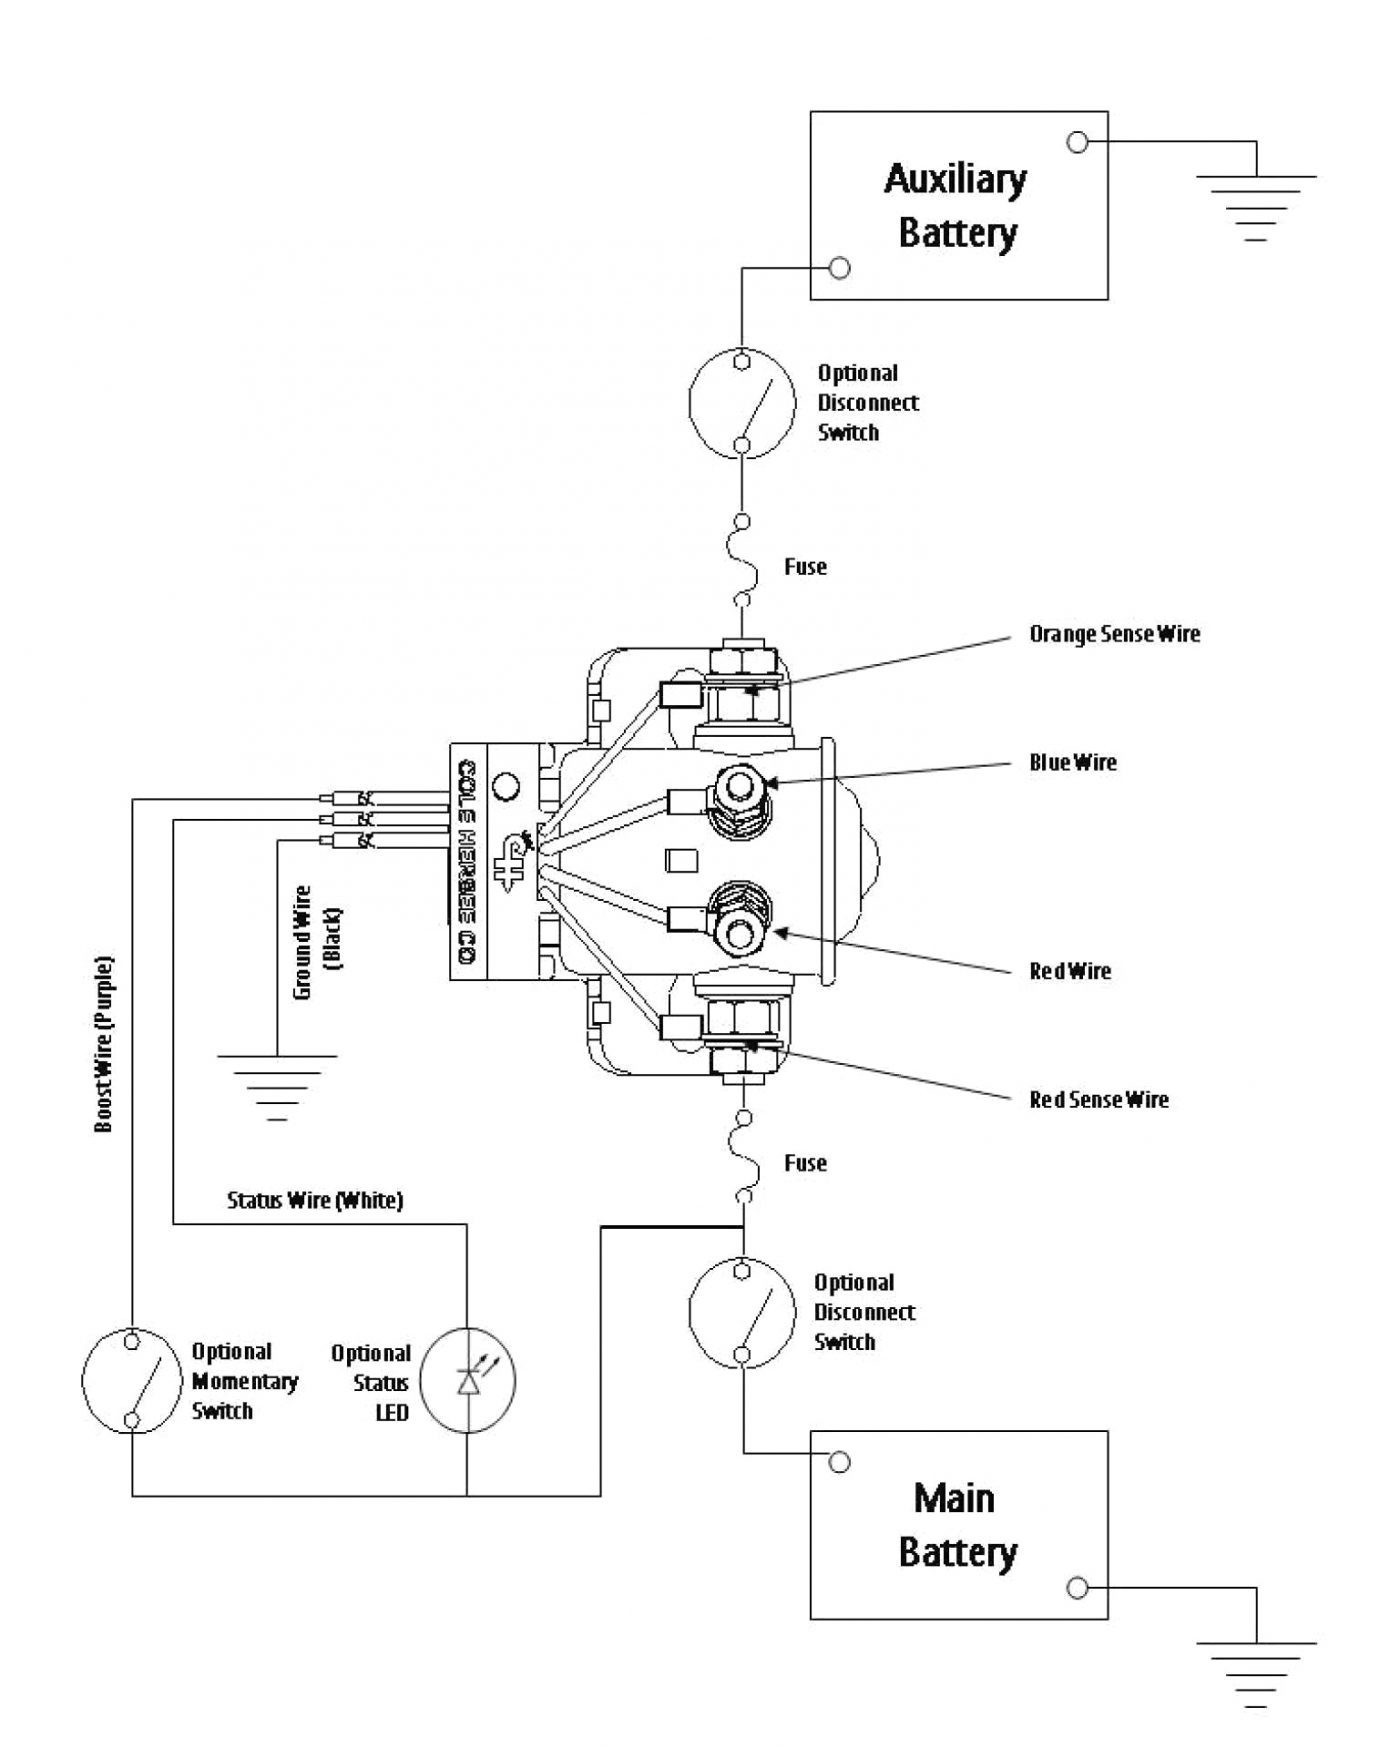 dually wiring diagram schematic wiring diagrams u2022 rh ar ics co Lace Sensor Pickup Wiring Tips Lace Sensor Pickup Wiring Tips